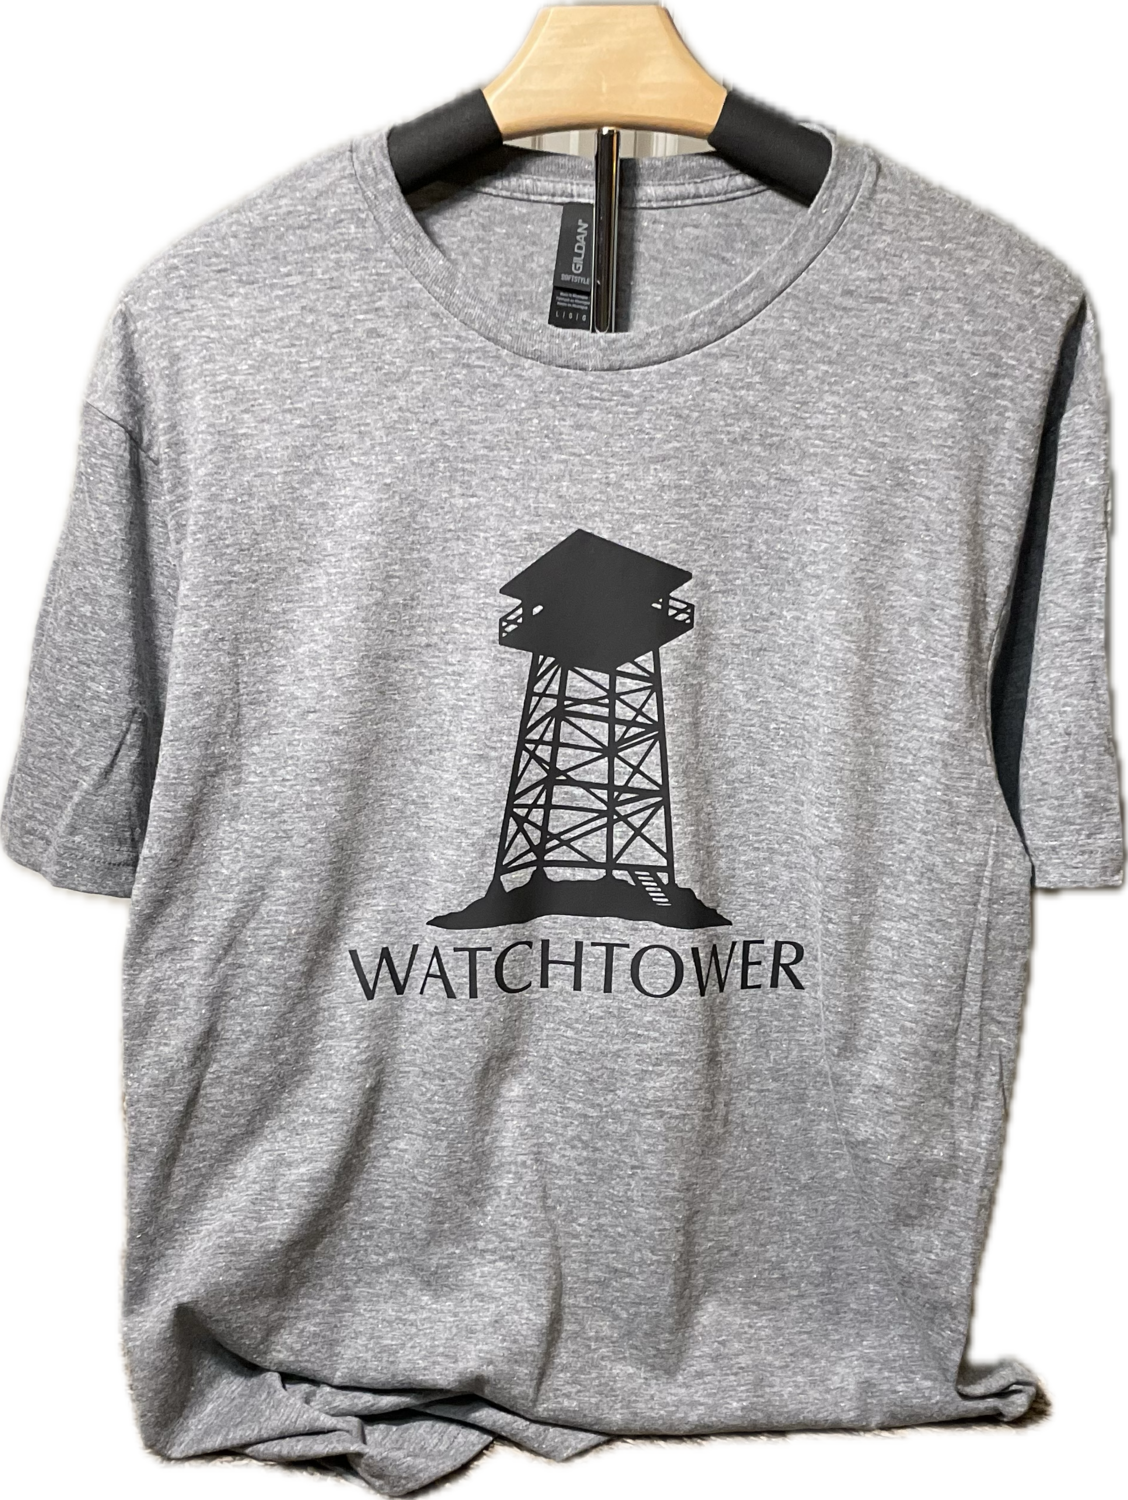 WatchTower Tee